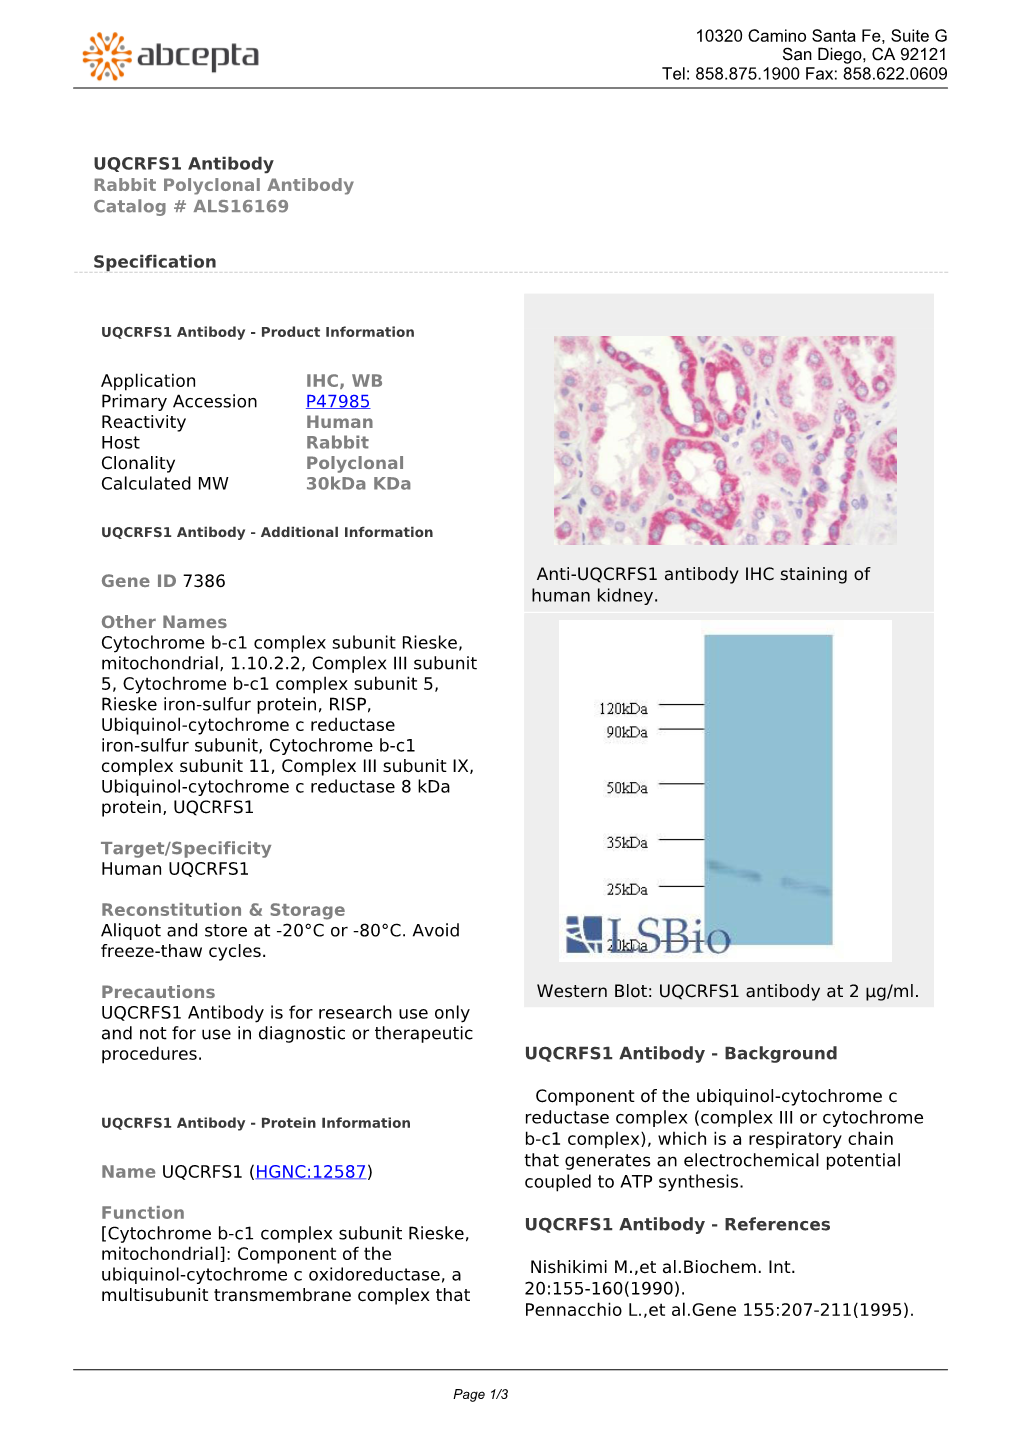 UQCRFS1 Antibody Rabbit Polyclonal Antibody Catalog # ALS16169